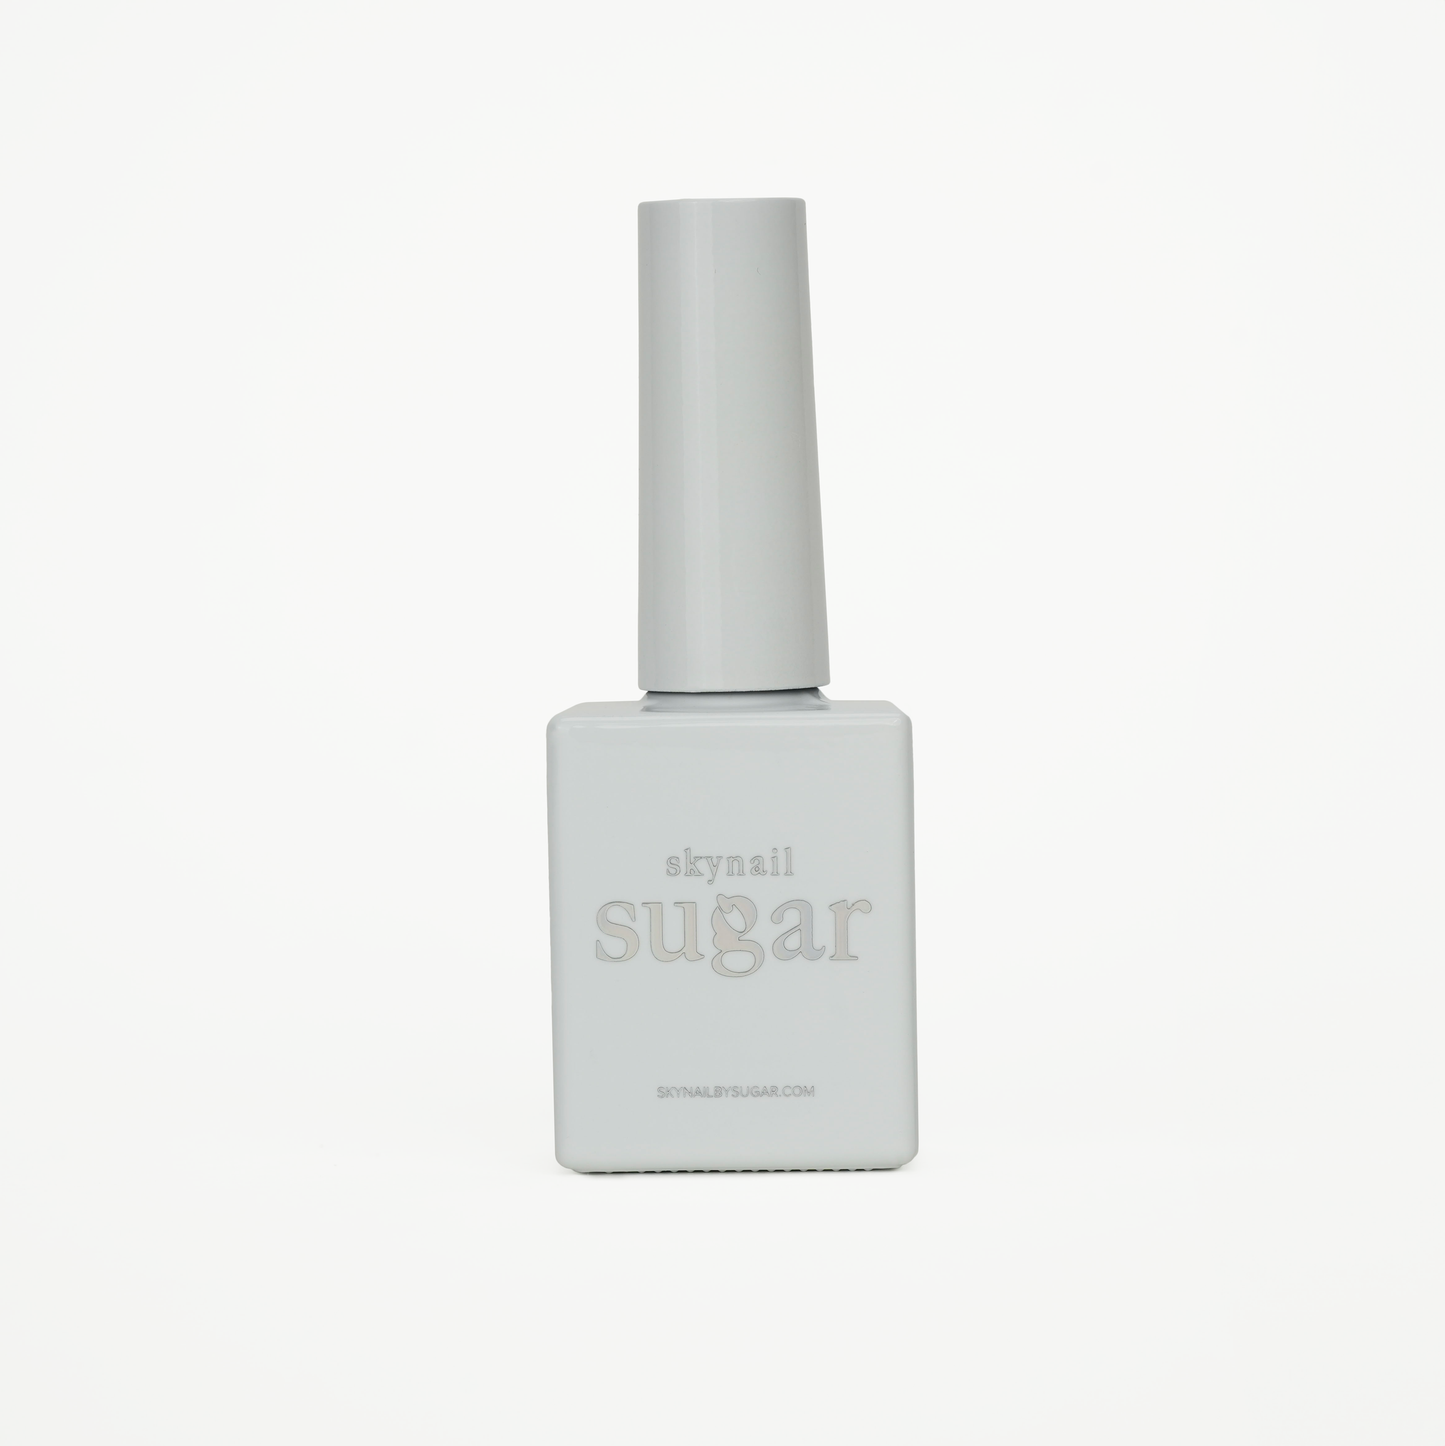 Bottle of syrup sn014 gel nail polish from Skynailbysugar